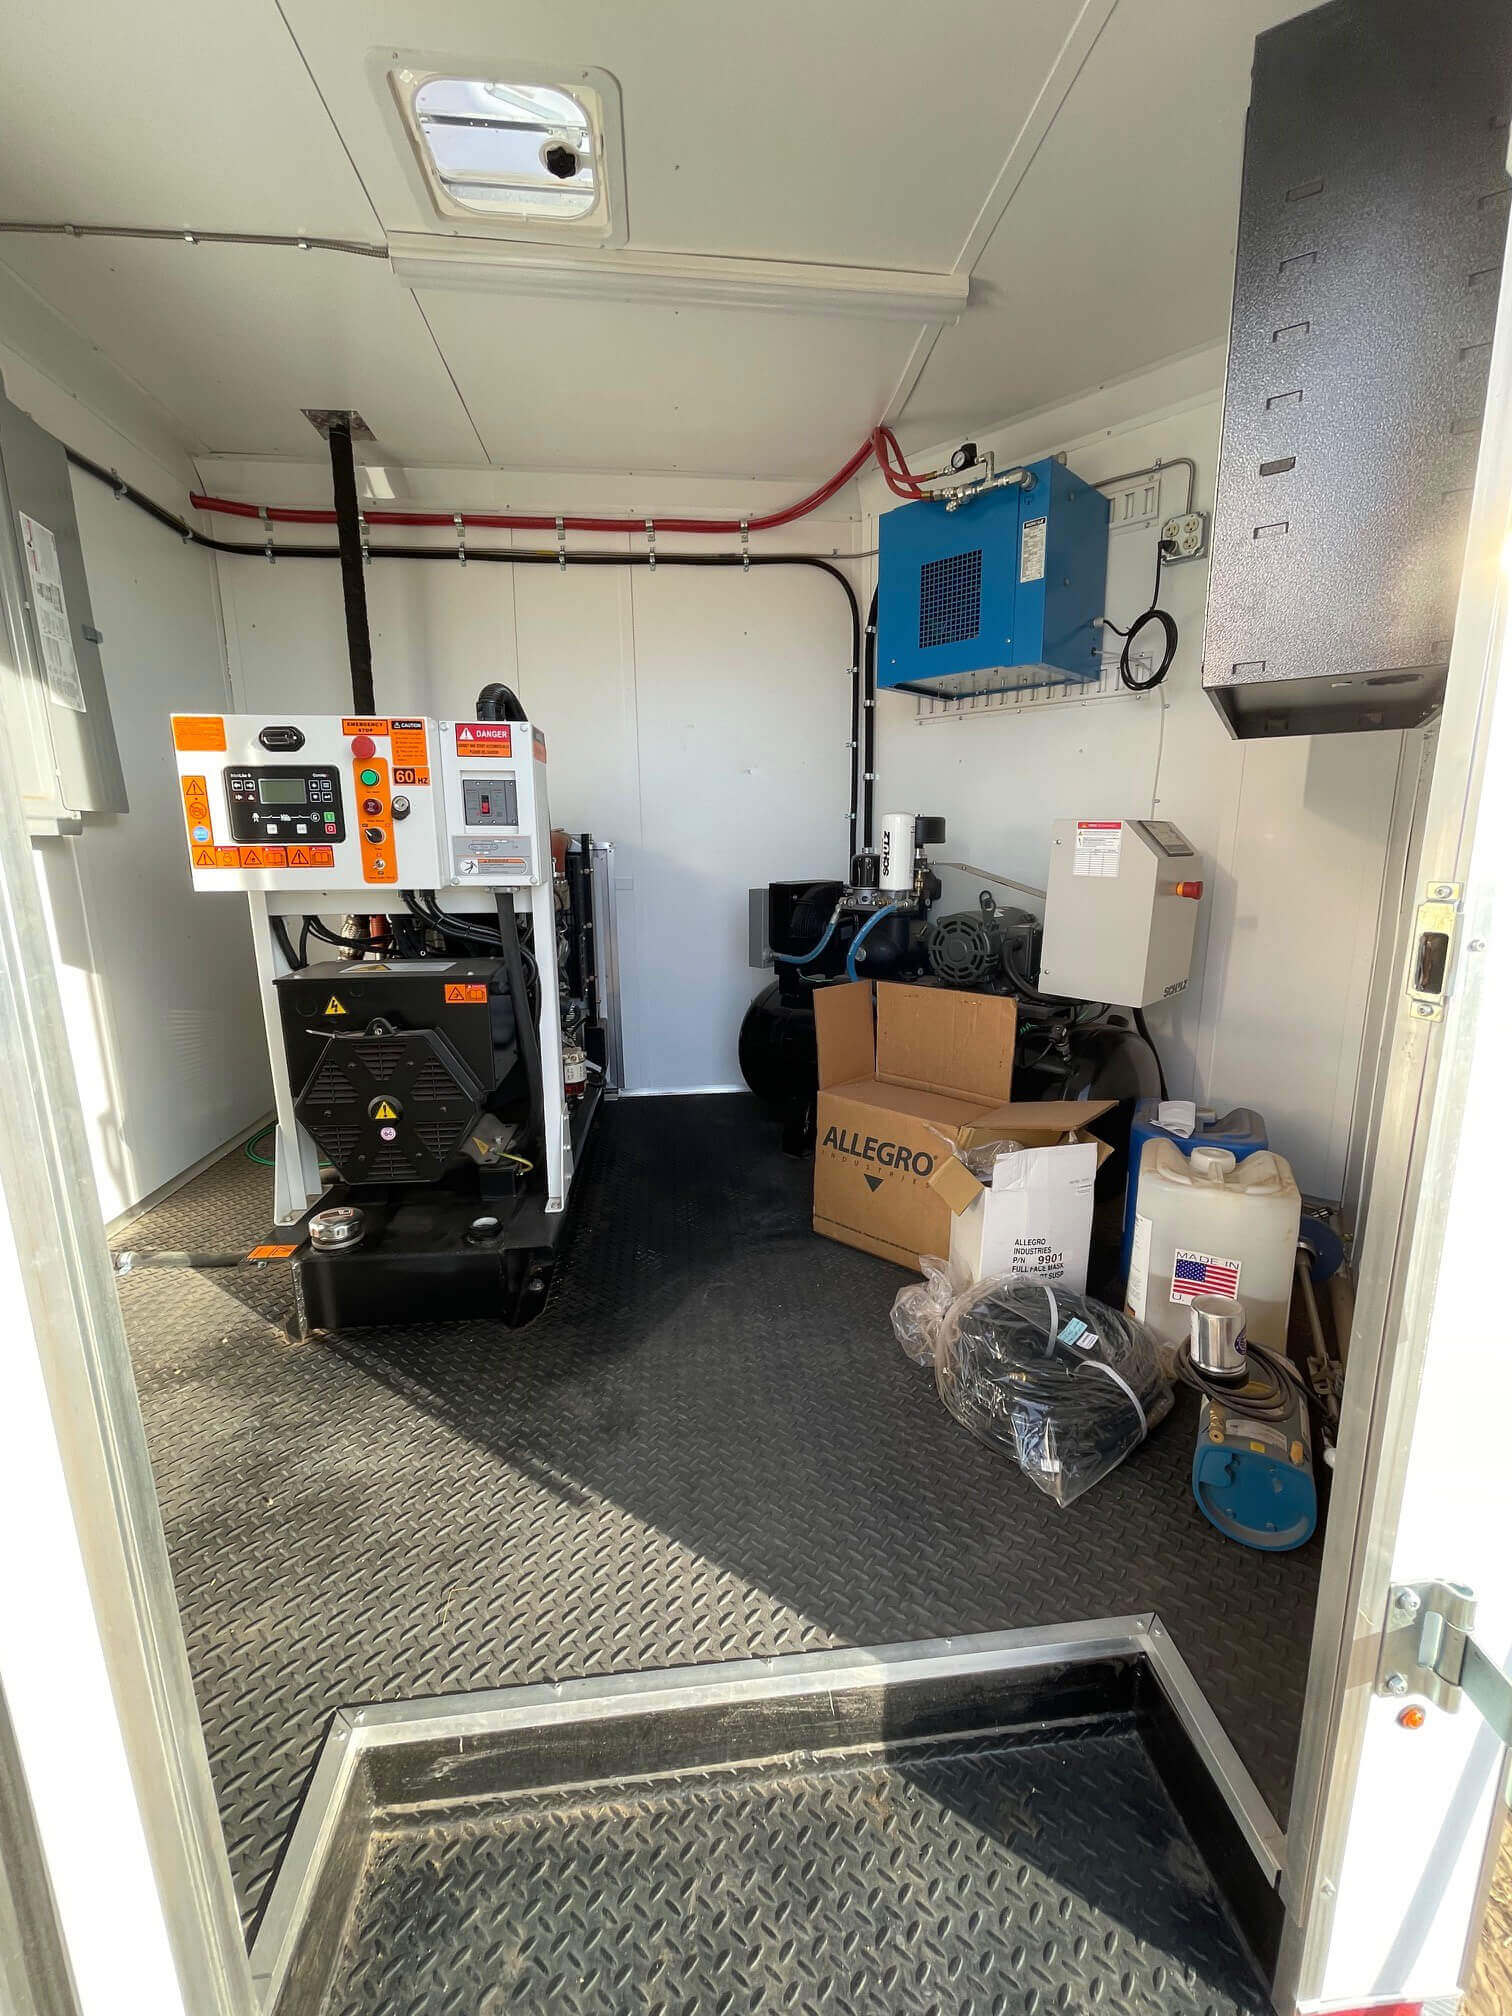 Spray foam equipment inside trailer of used rig for sale